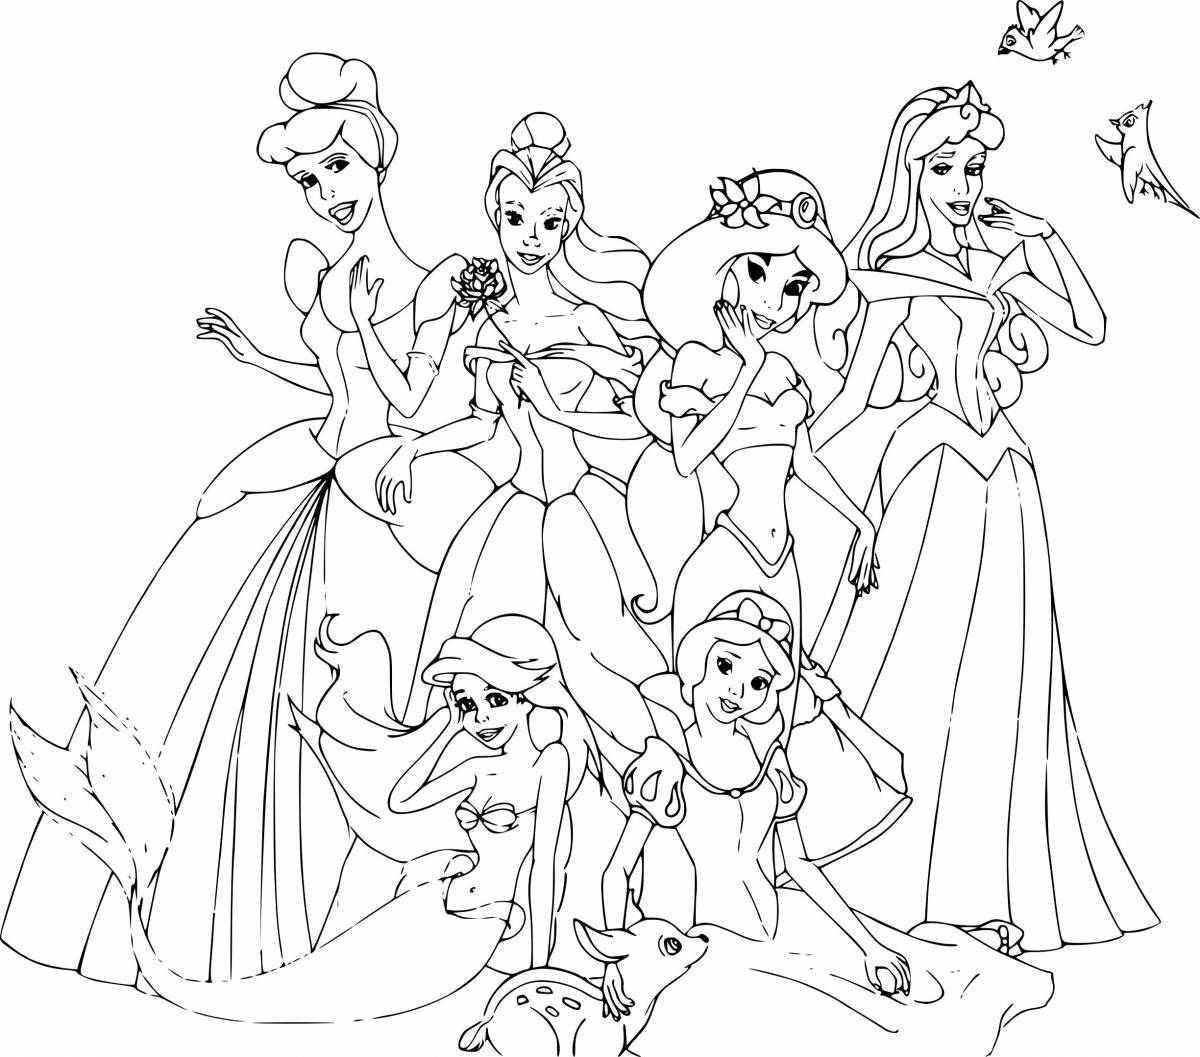 Joyful coloring all princesses